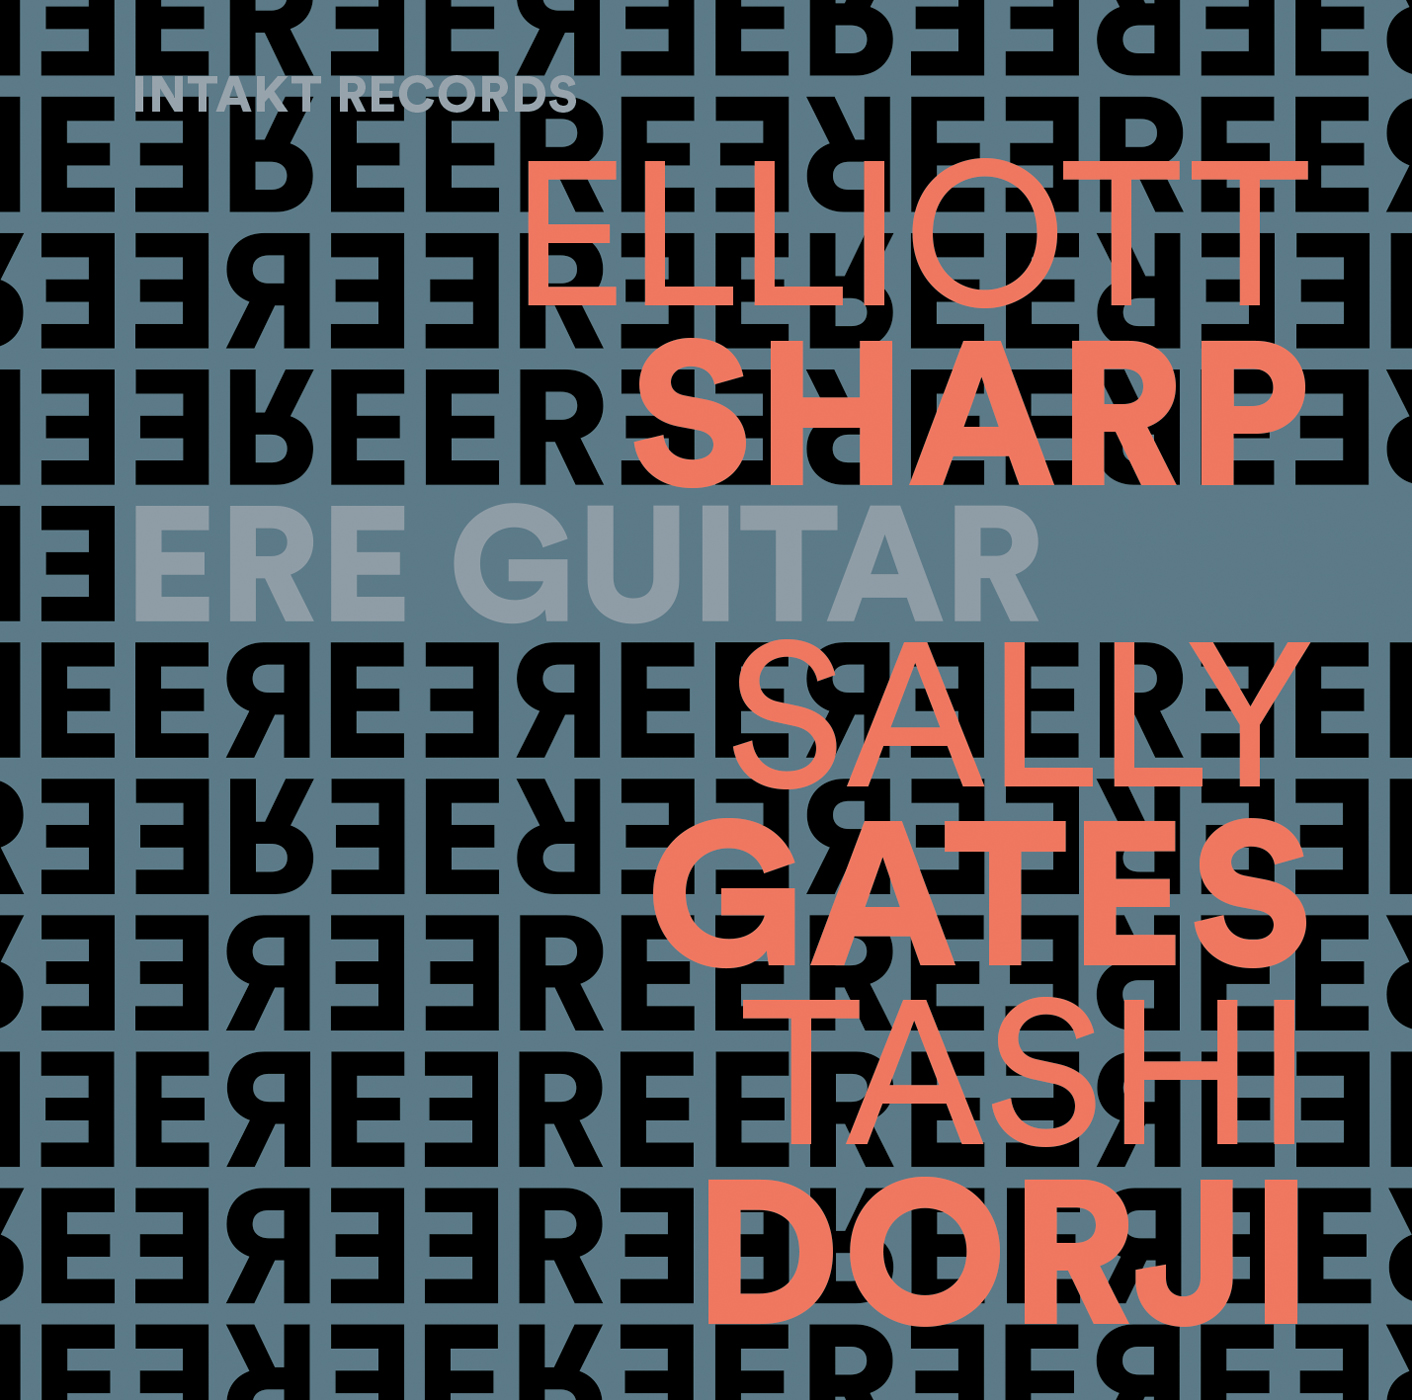 ELLIOTT SHARP - SALLY GATES - TASHI DORJI: ERE GUITAR. front cover Intakt #418